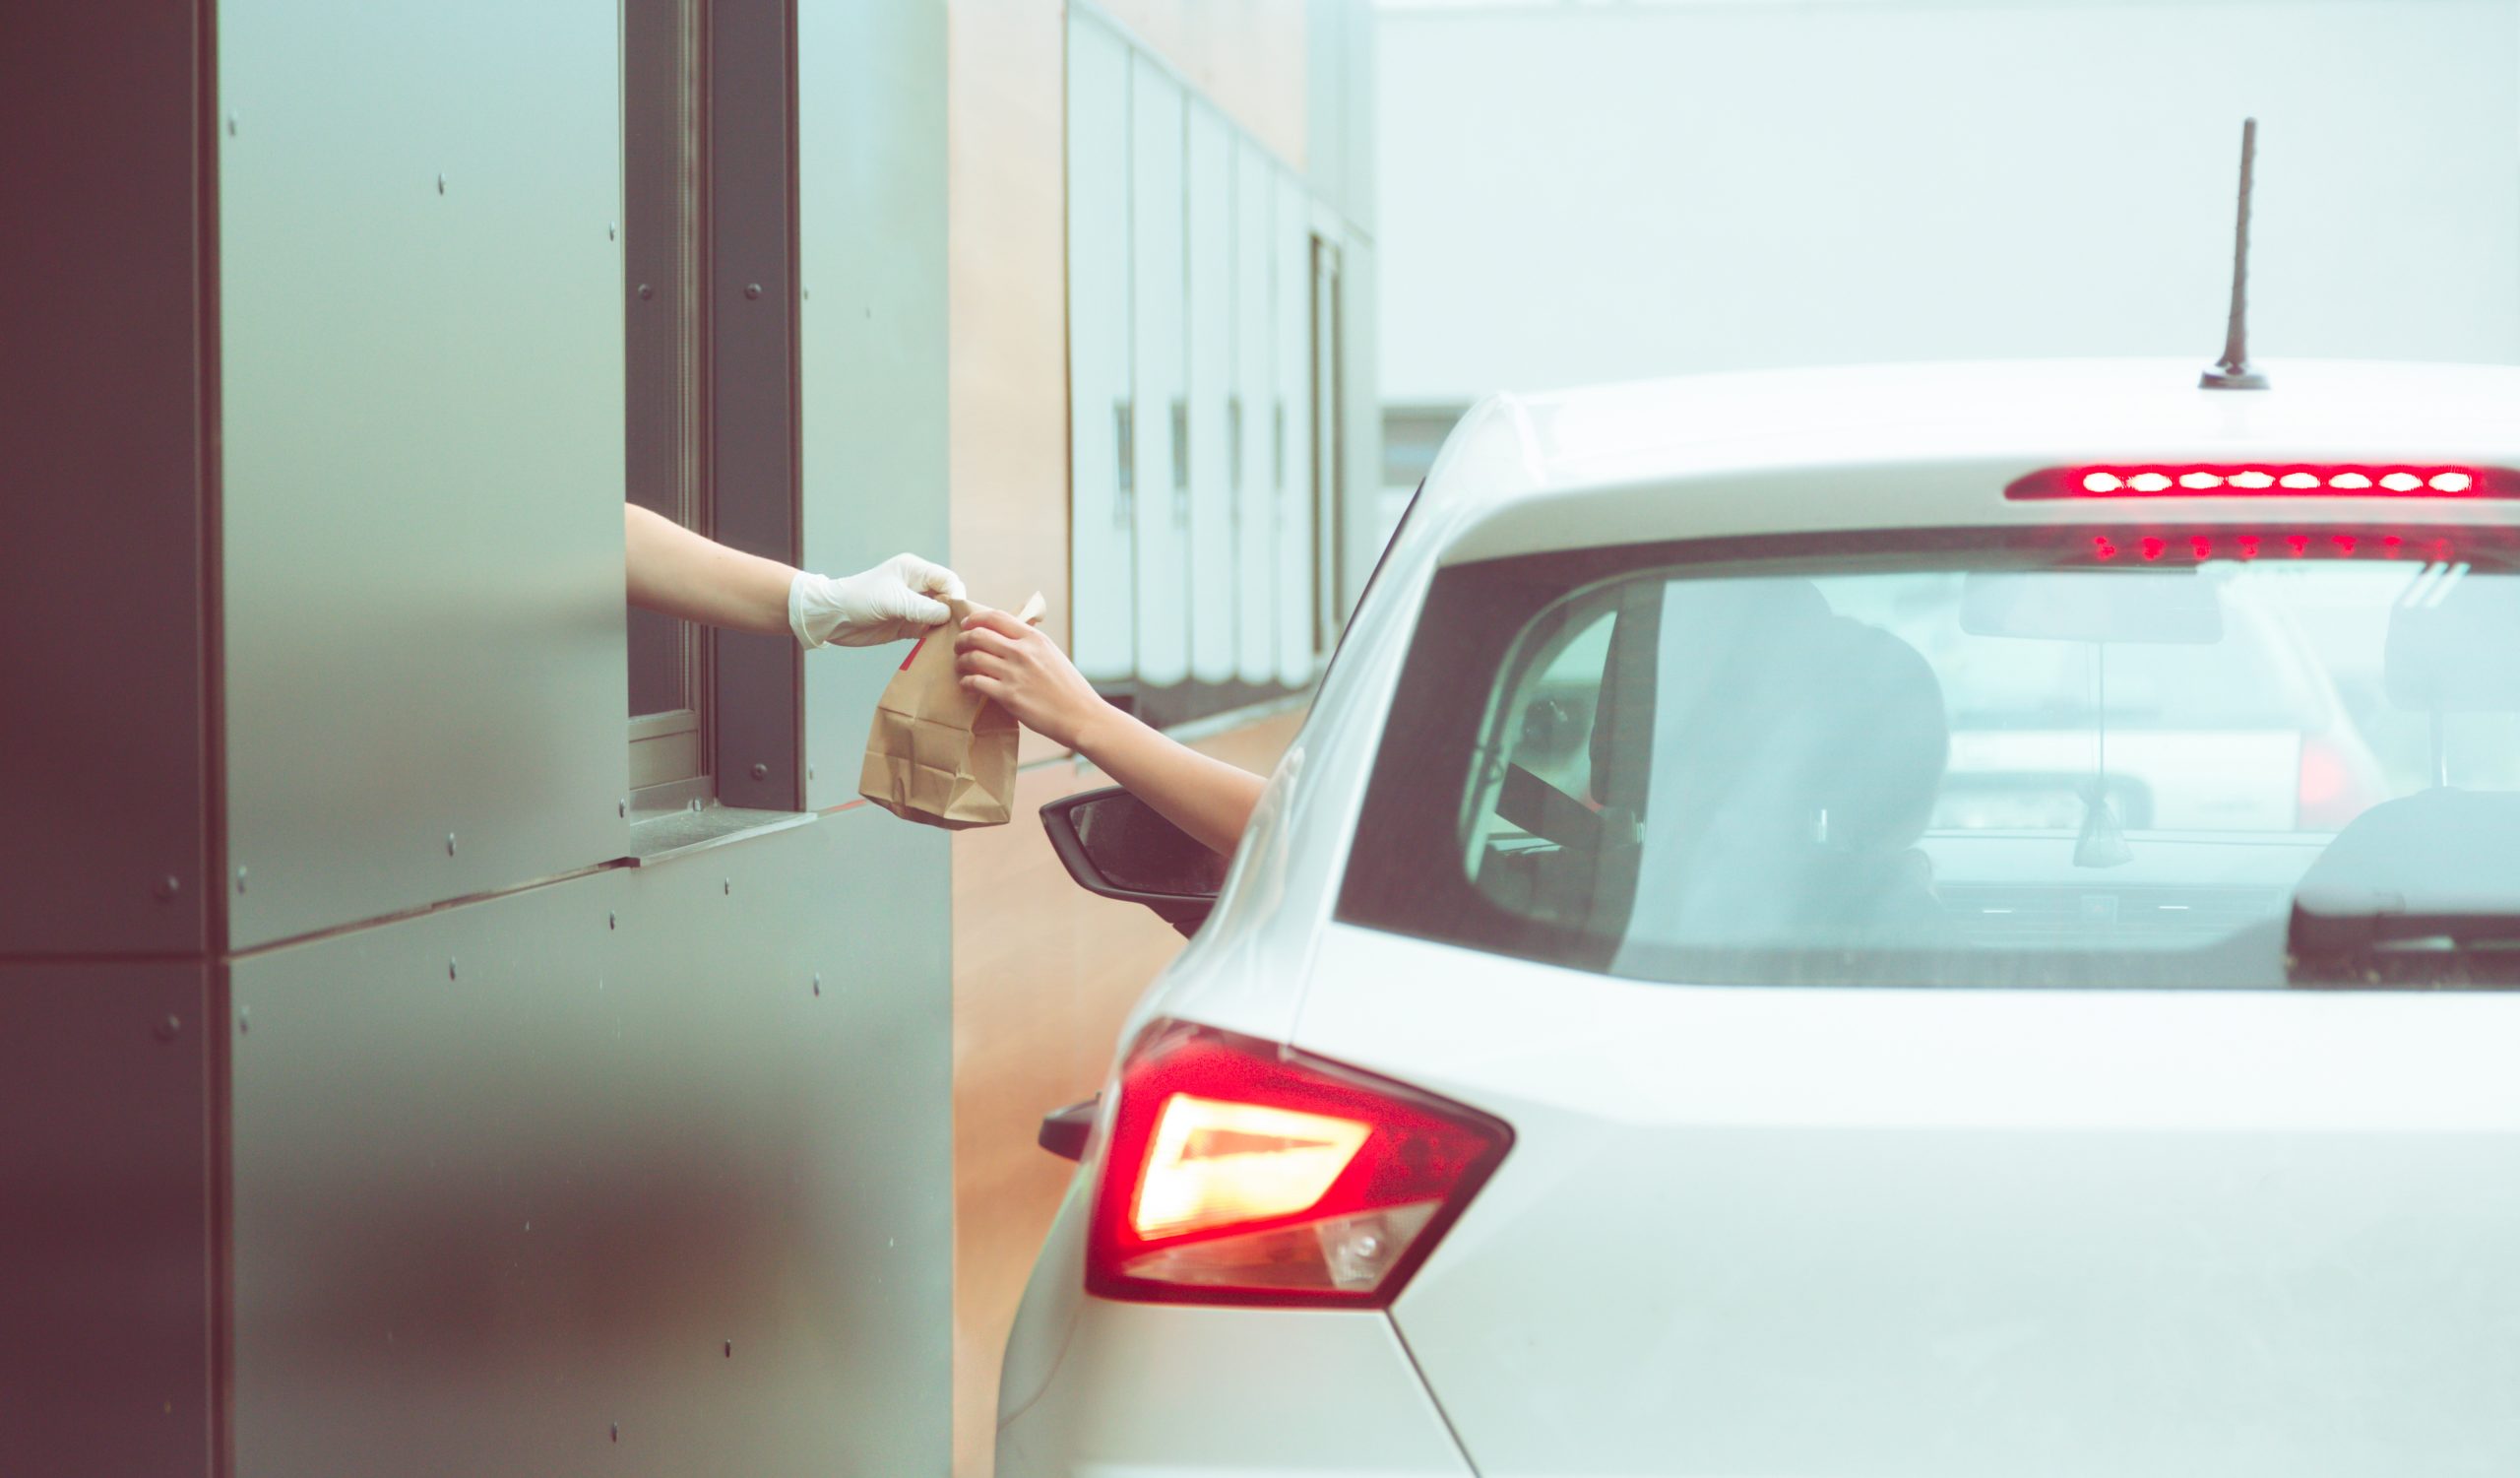 A person receiving a bag of food through a drive-through window